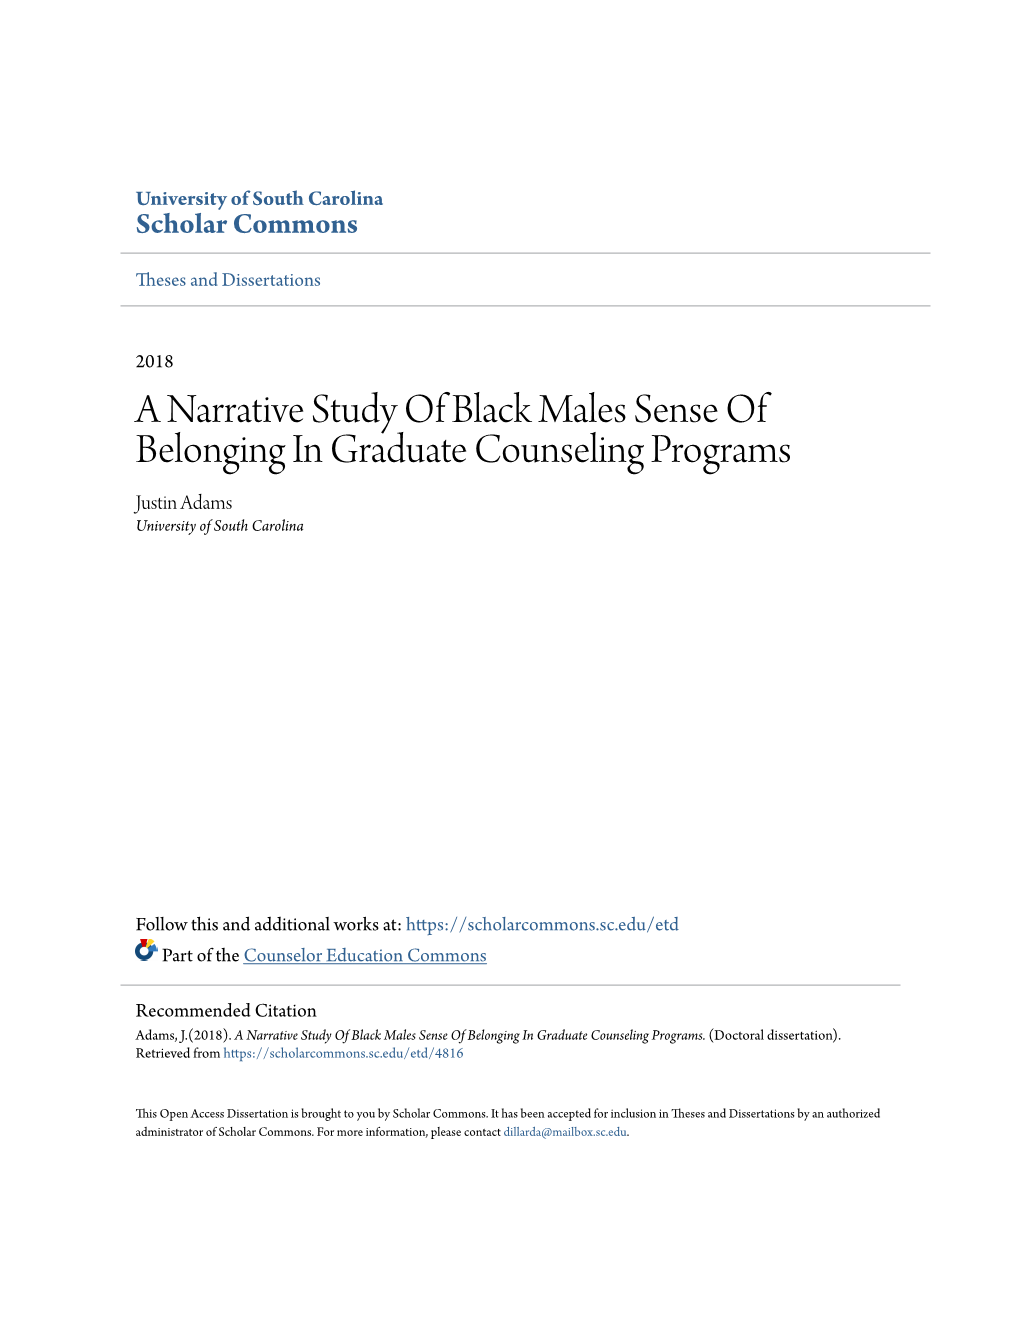 A Narrative Study of Black Males Sense of Belonging in Graduate Counseling Programs Justin Adams University of South Carolina